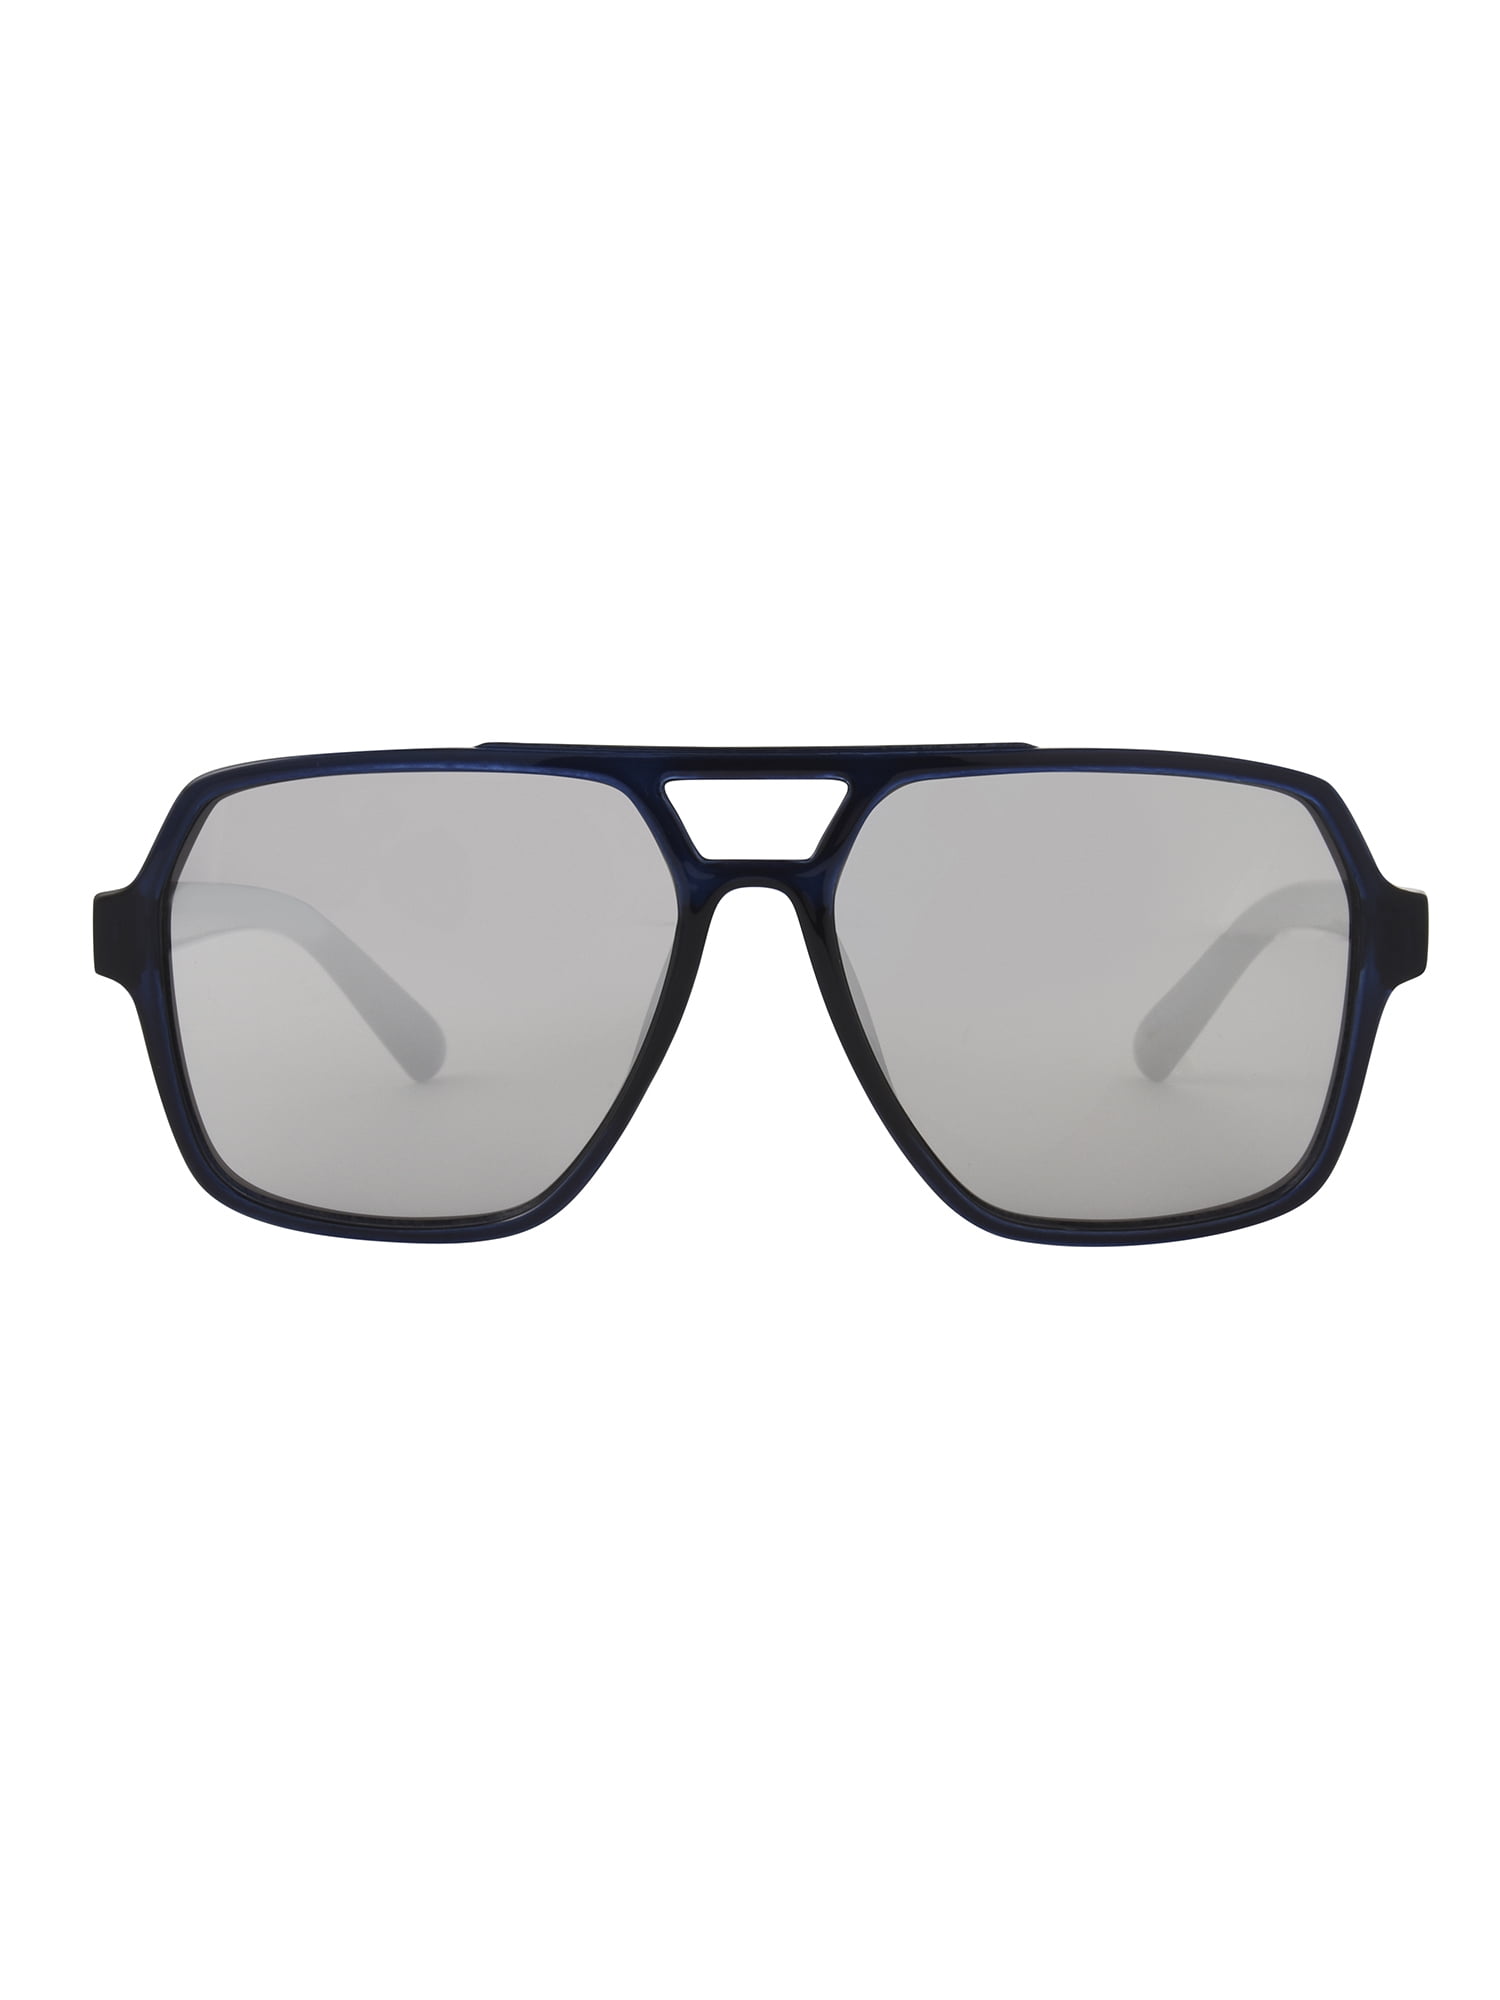 Foster Grant Men's Cali Blue Aviator Sunglasses - Walmart.com